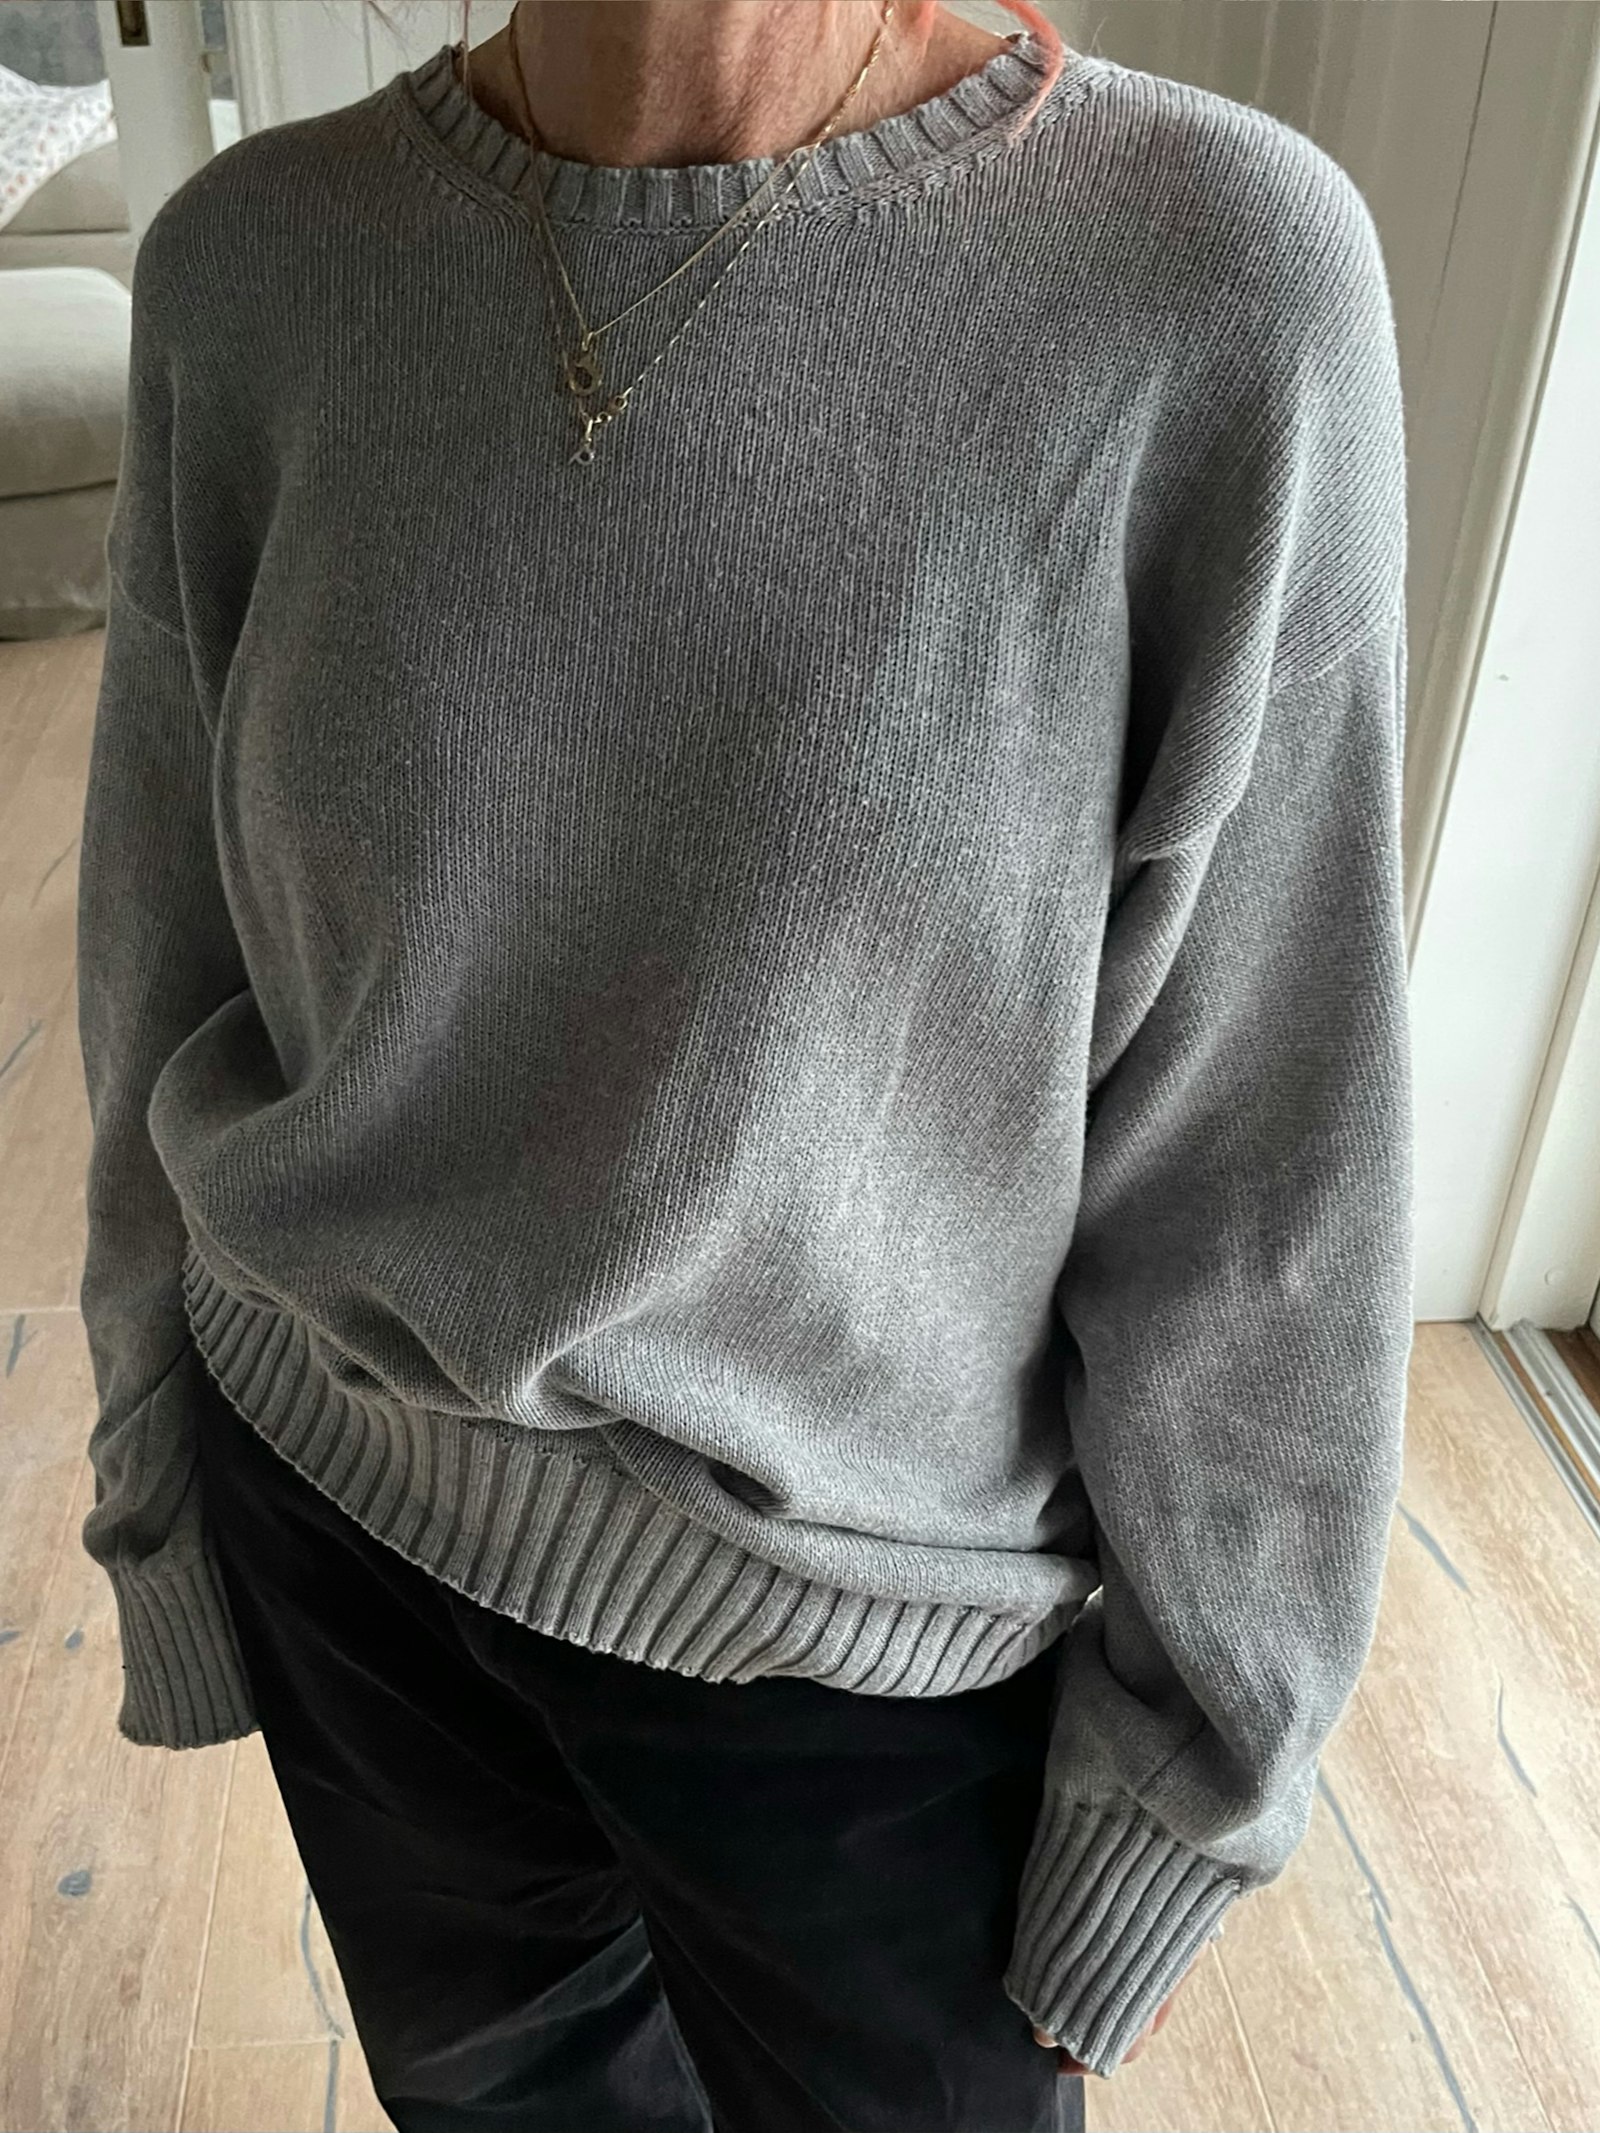 Light Grey, 100% Cotton Crew Neck Sweater